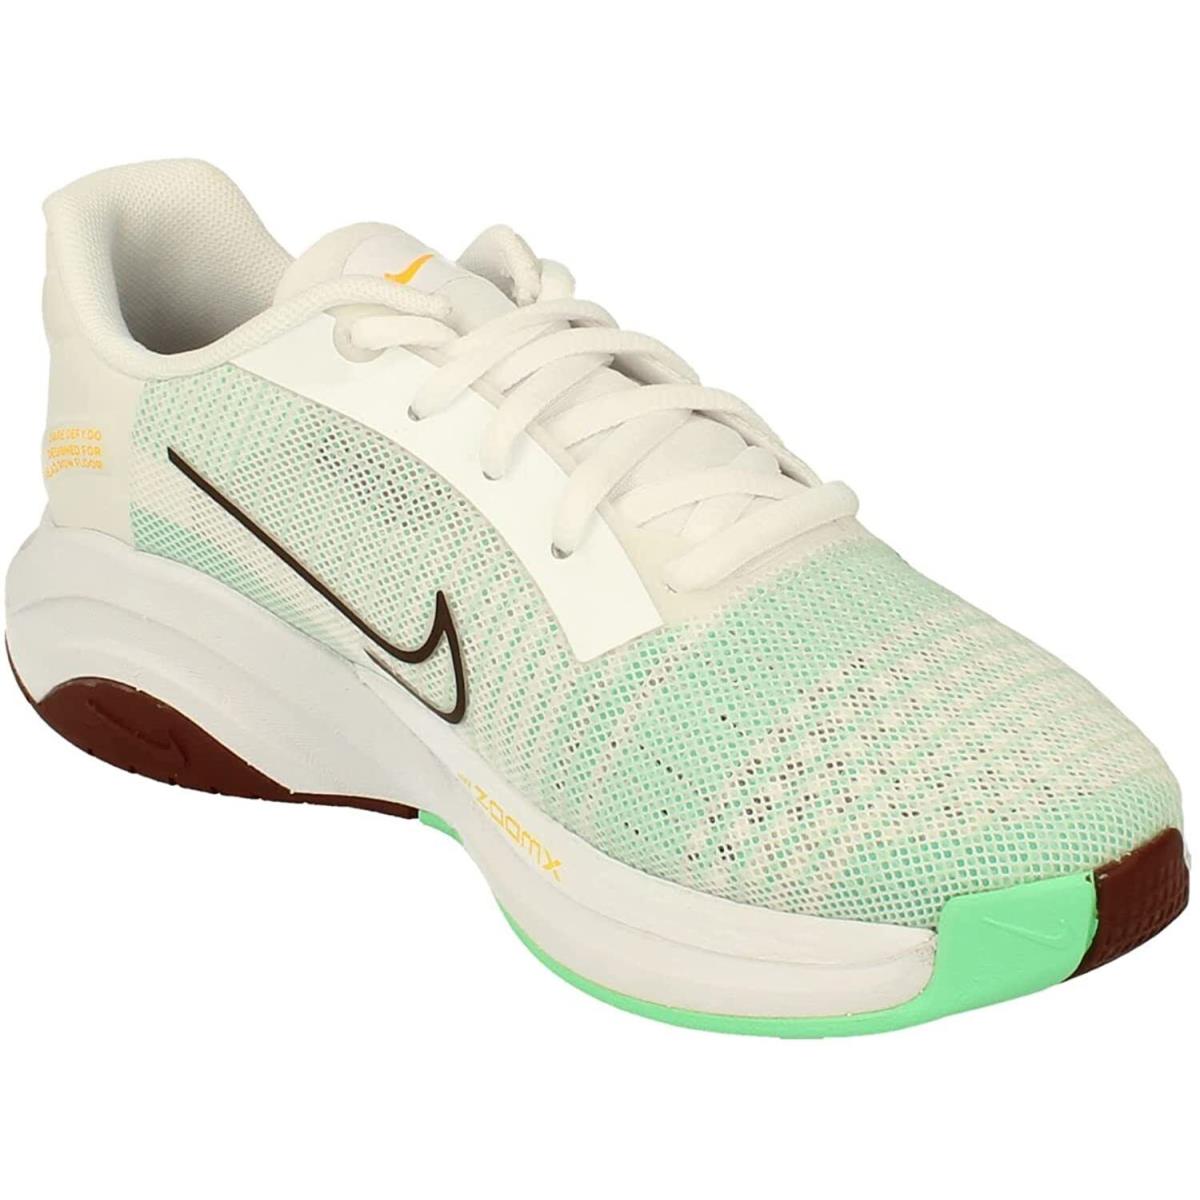 Nike Womens Zoomx Superrep Surge Running Shoe CK9406 135 Size 12 US